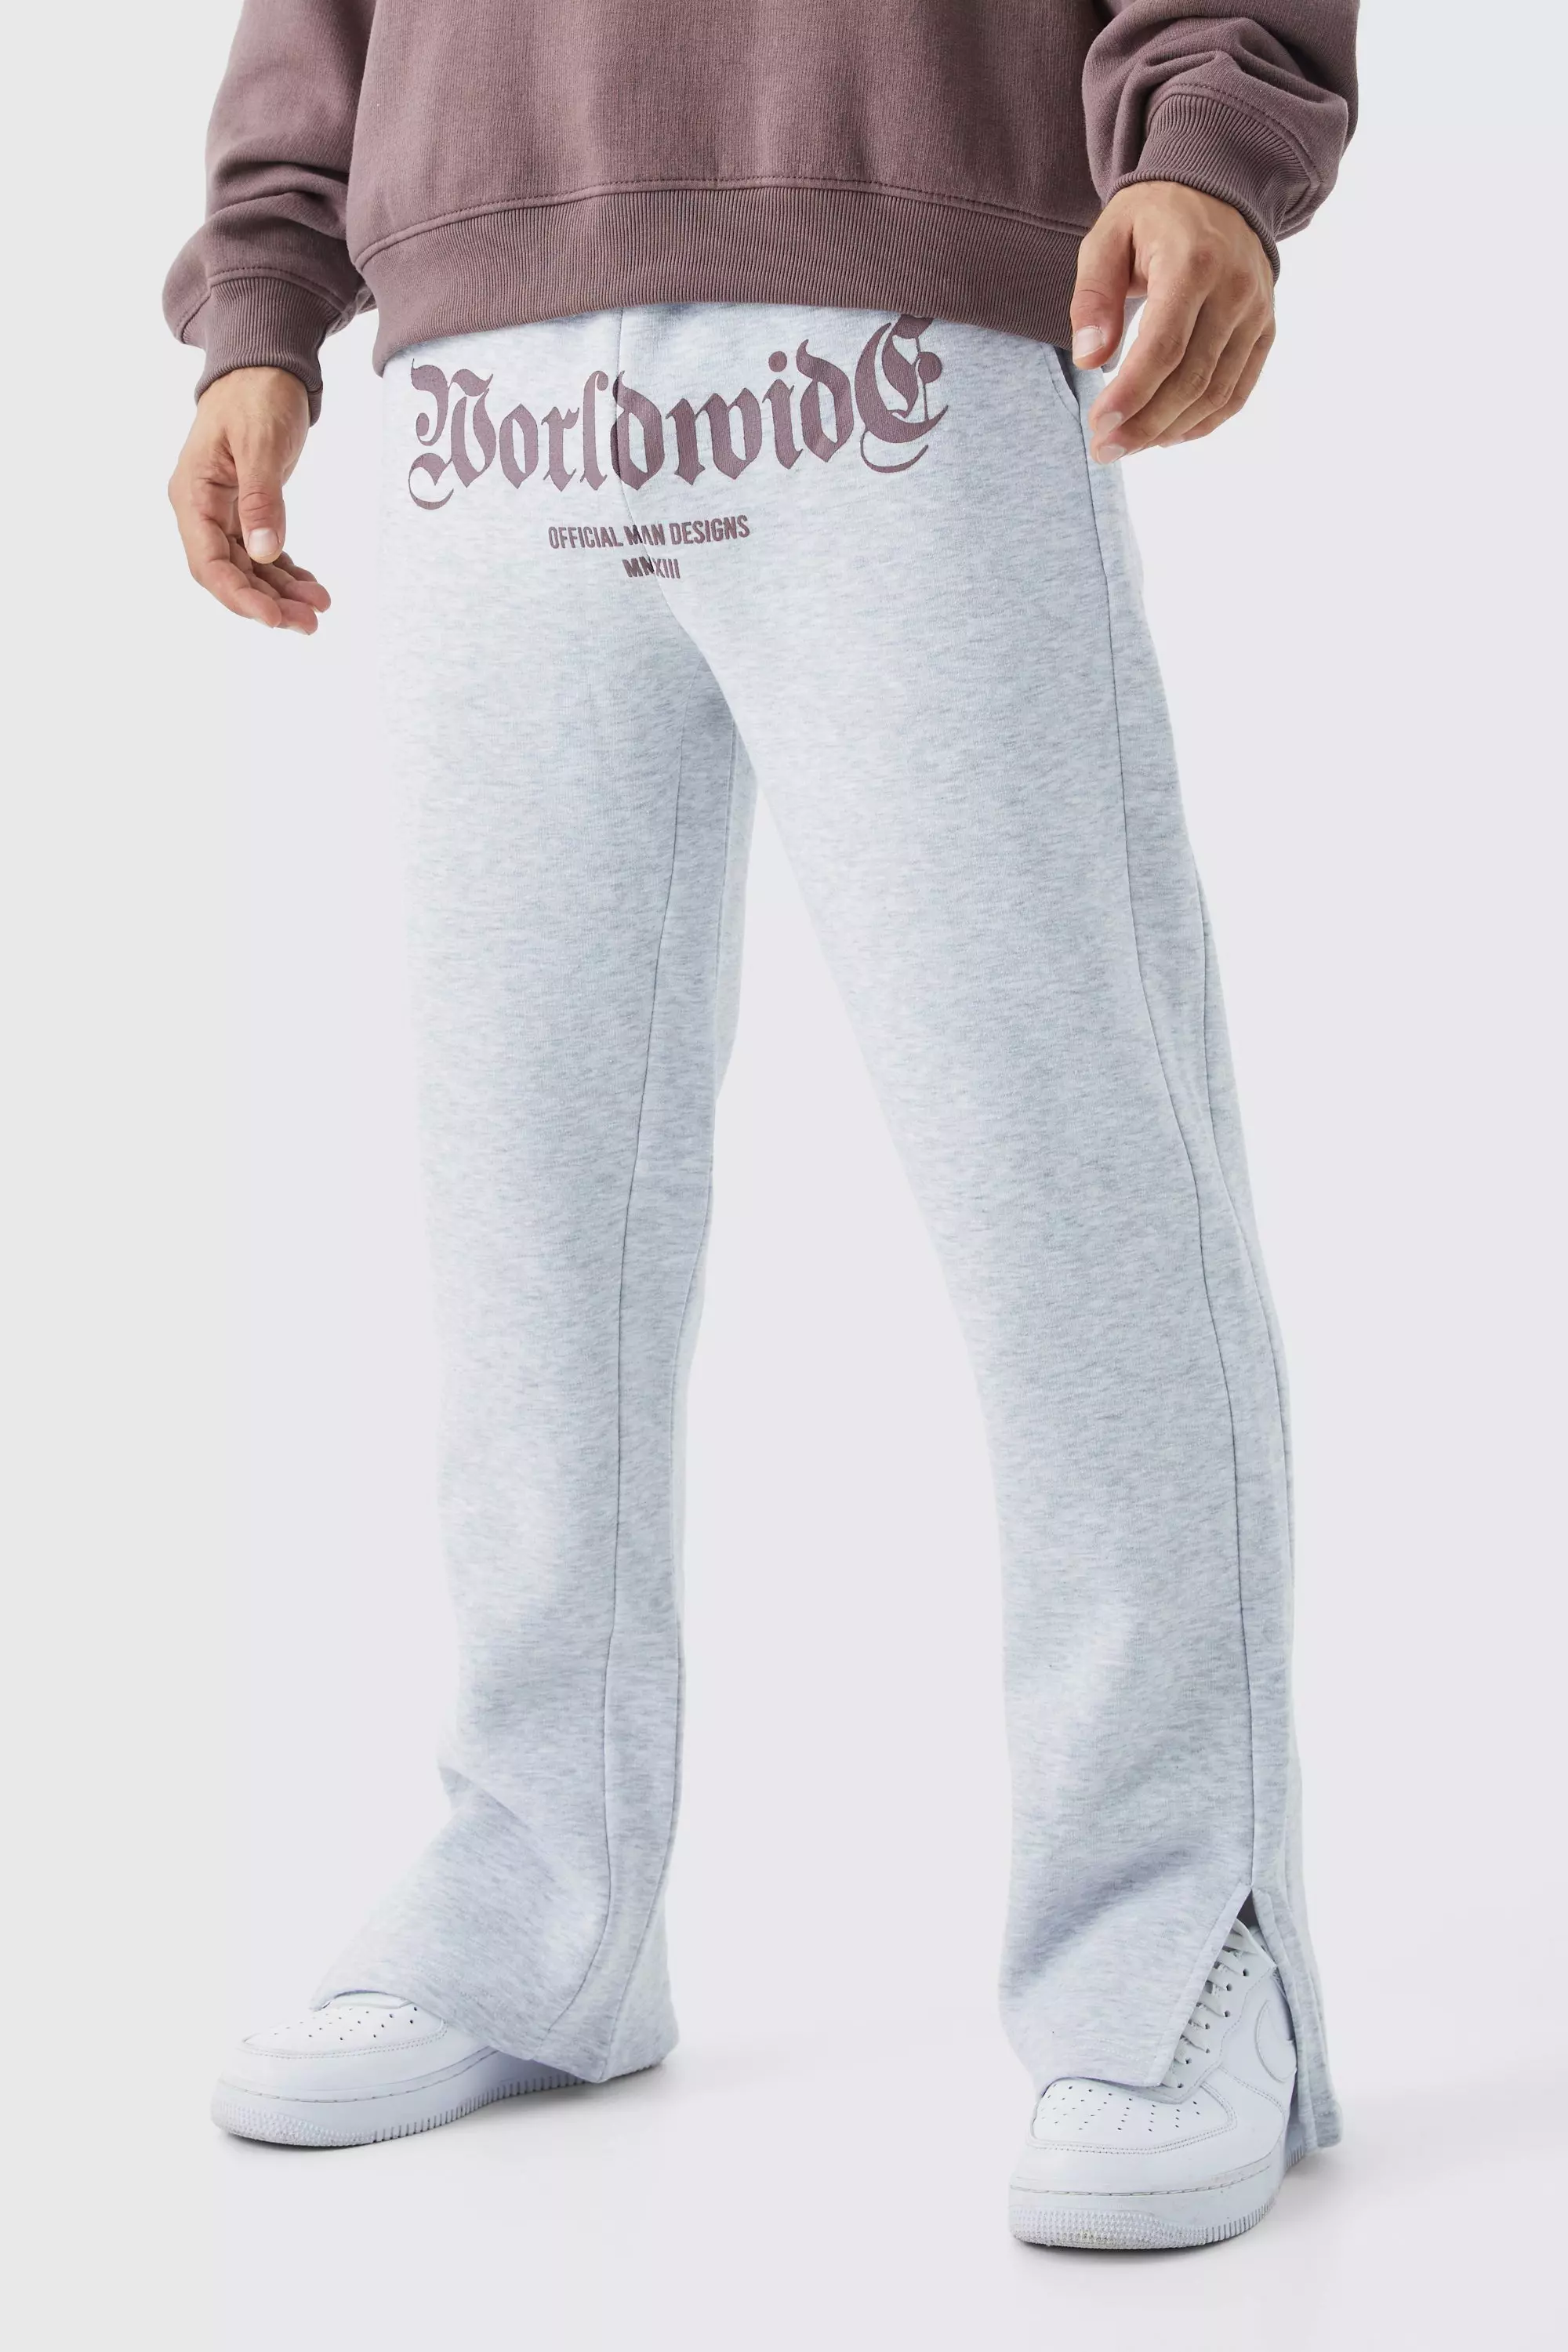 Worldwide Crotch Print Split Hem Gusset Sweatpants Ash grey